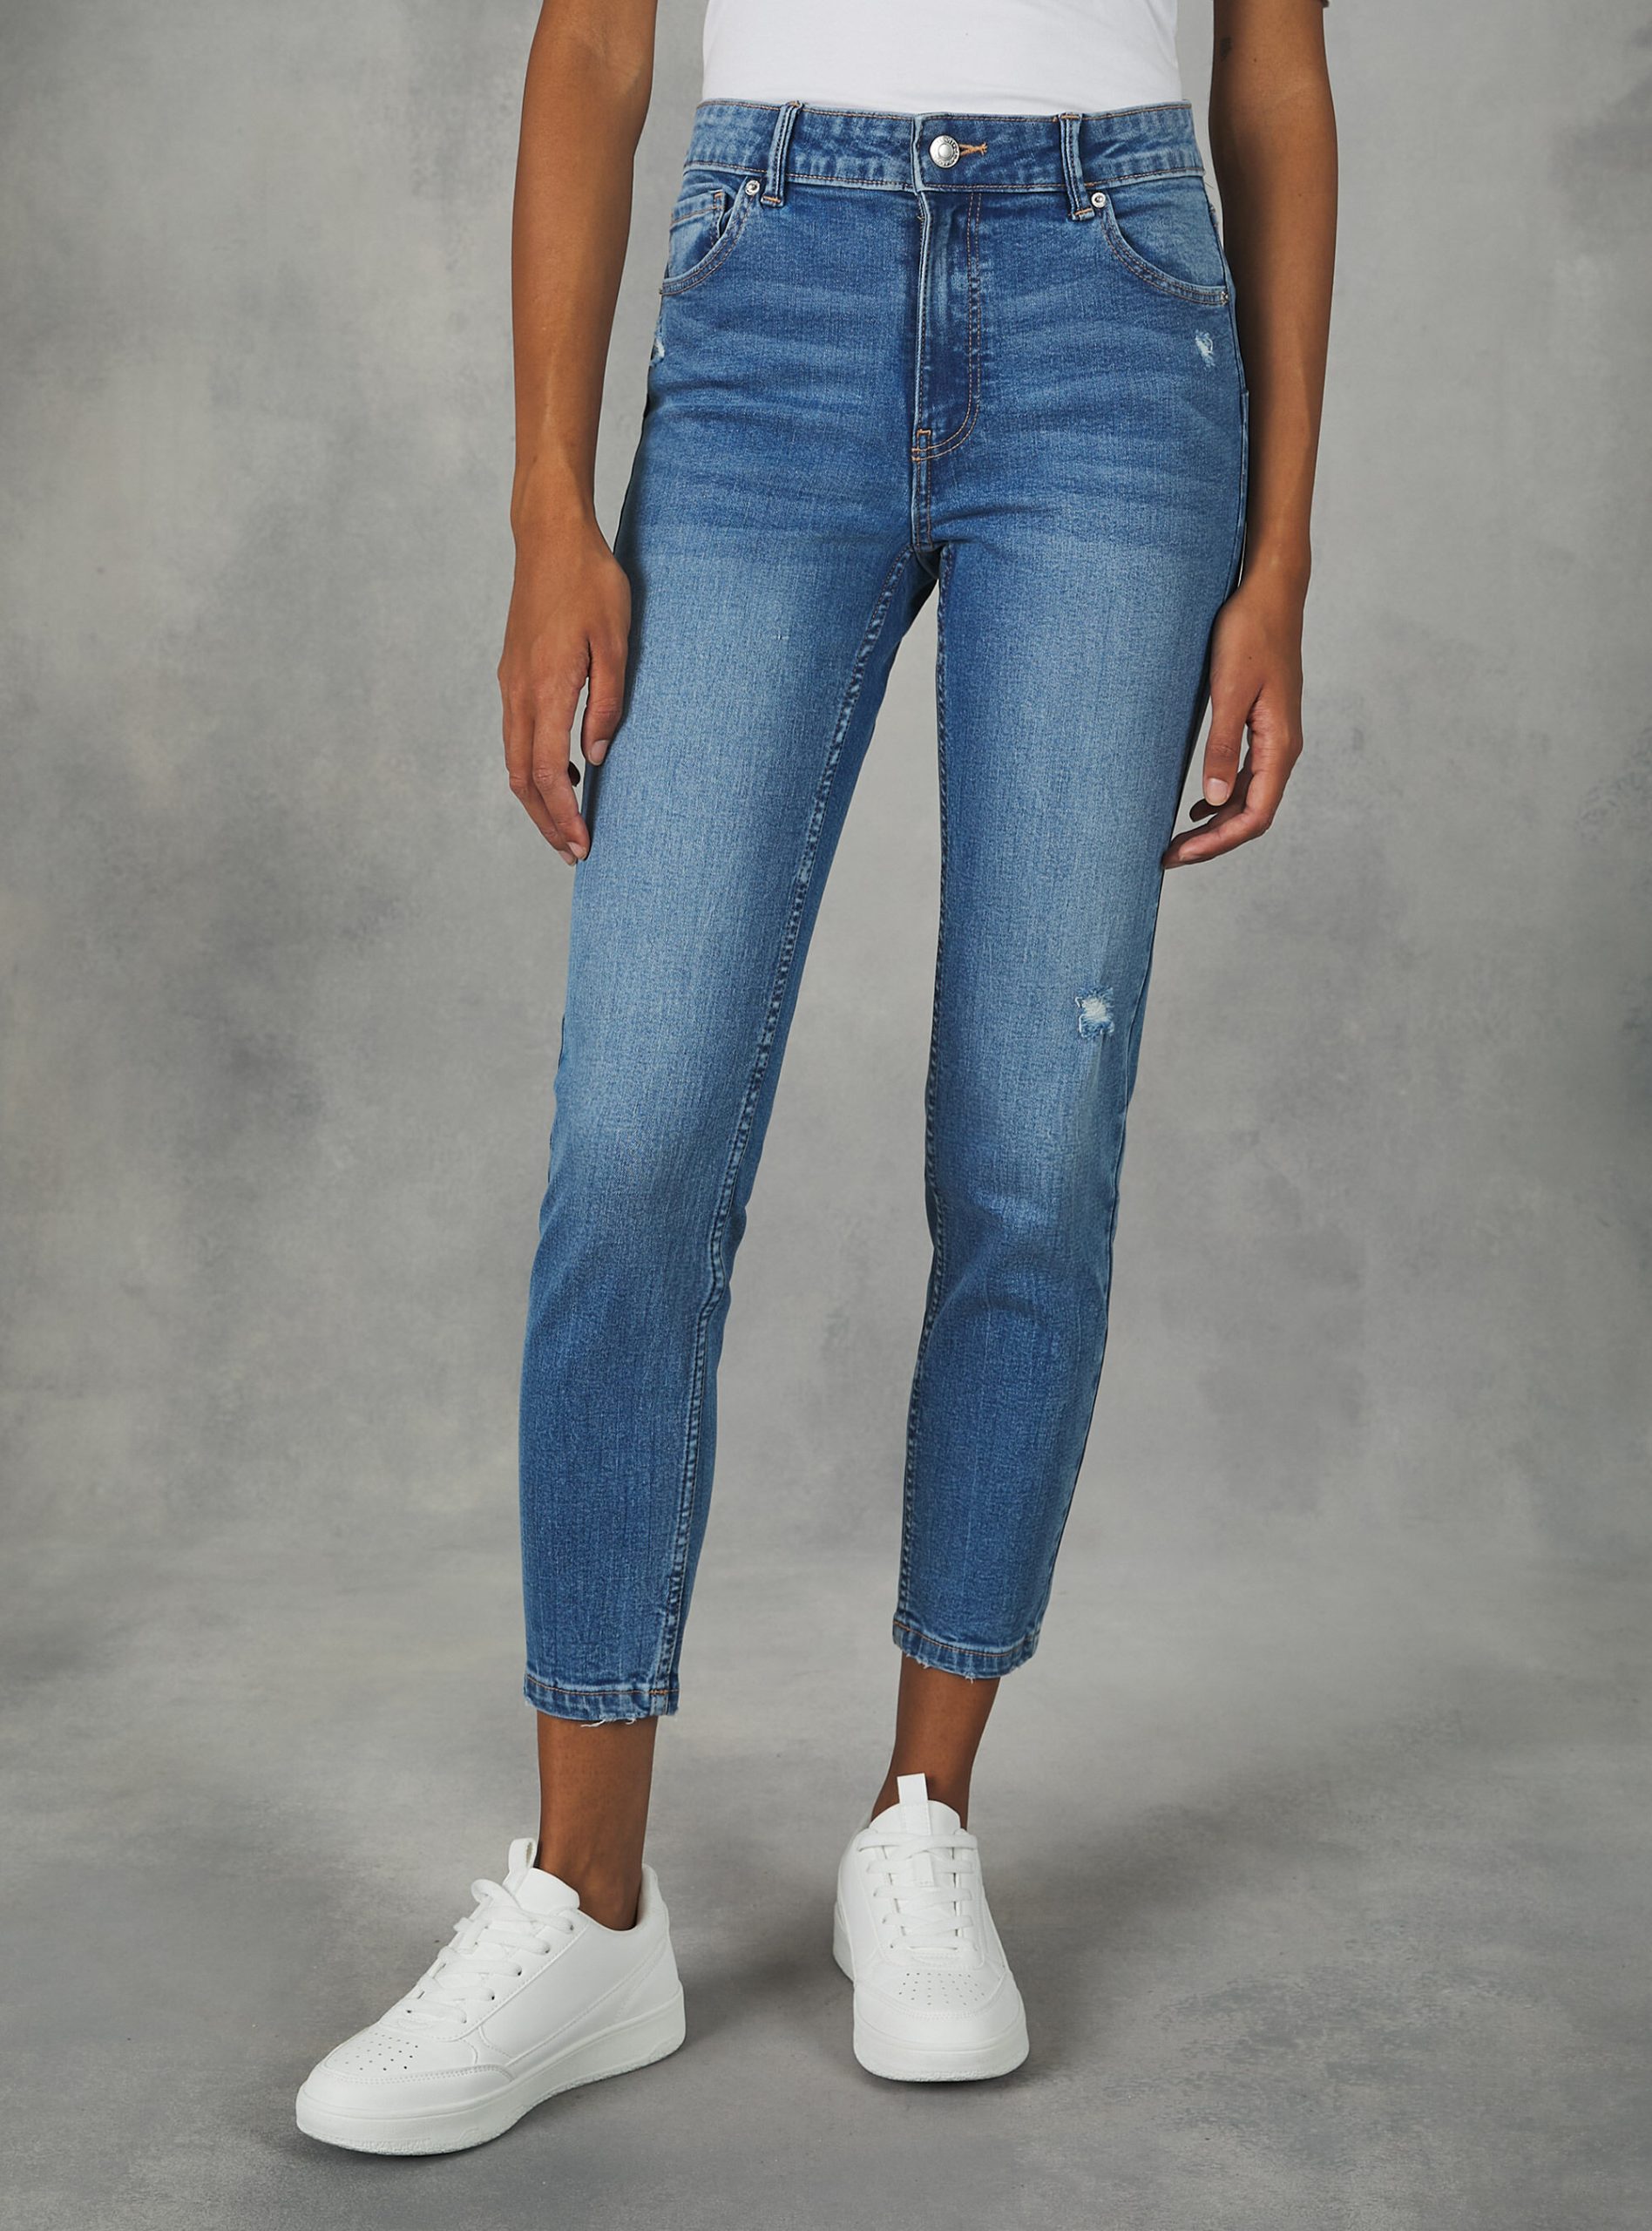 Jeans Alcott Frauen Skinny Jeans With Push-Up Effect D002 Medium Dark Blue Eigenschaft – 2